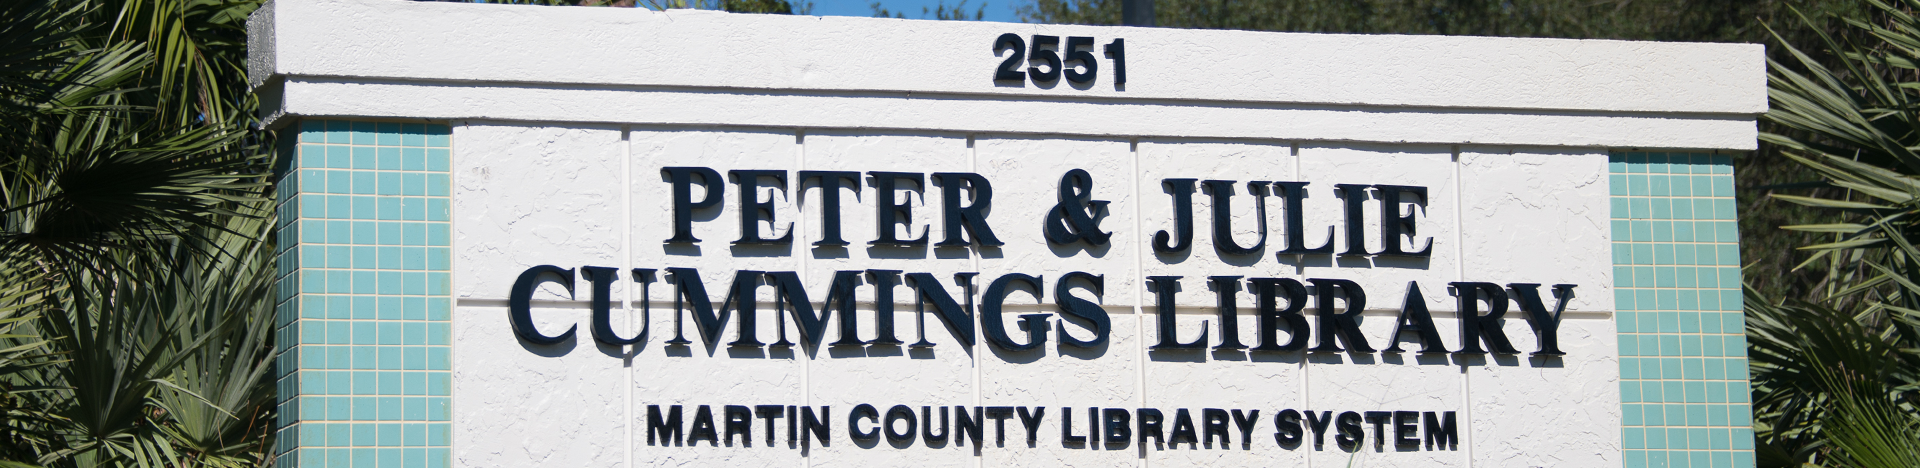 Peter and Julie Cummings Library